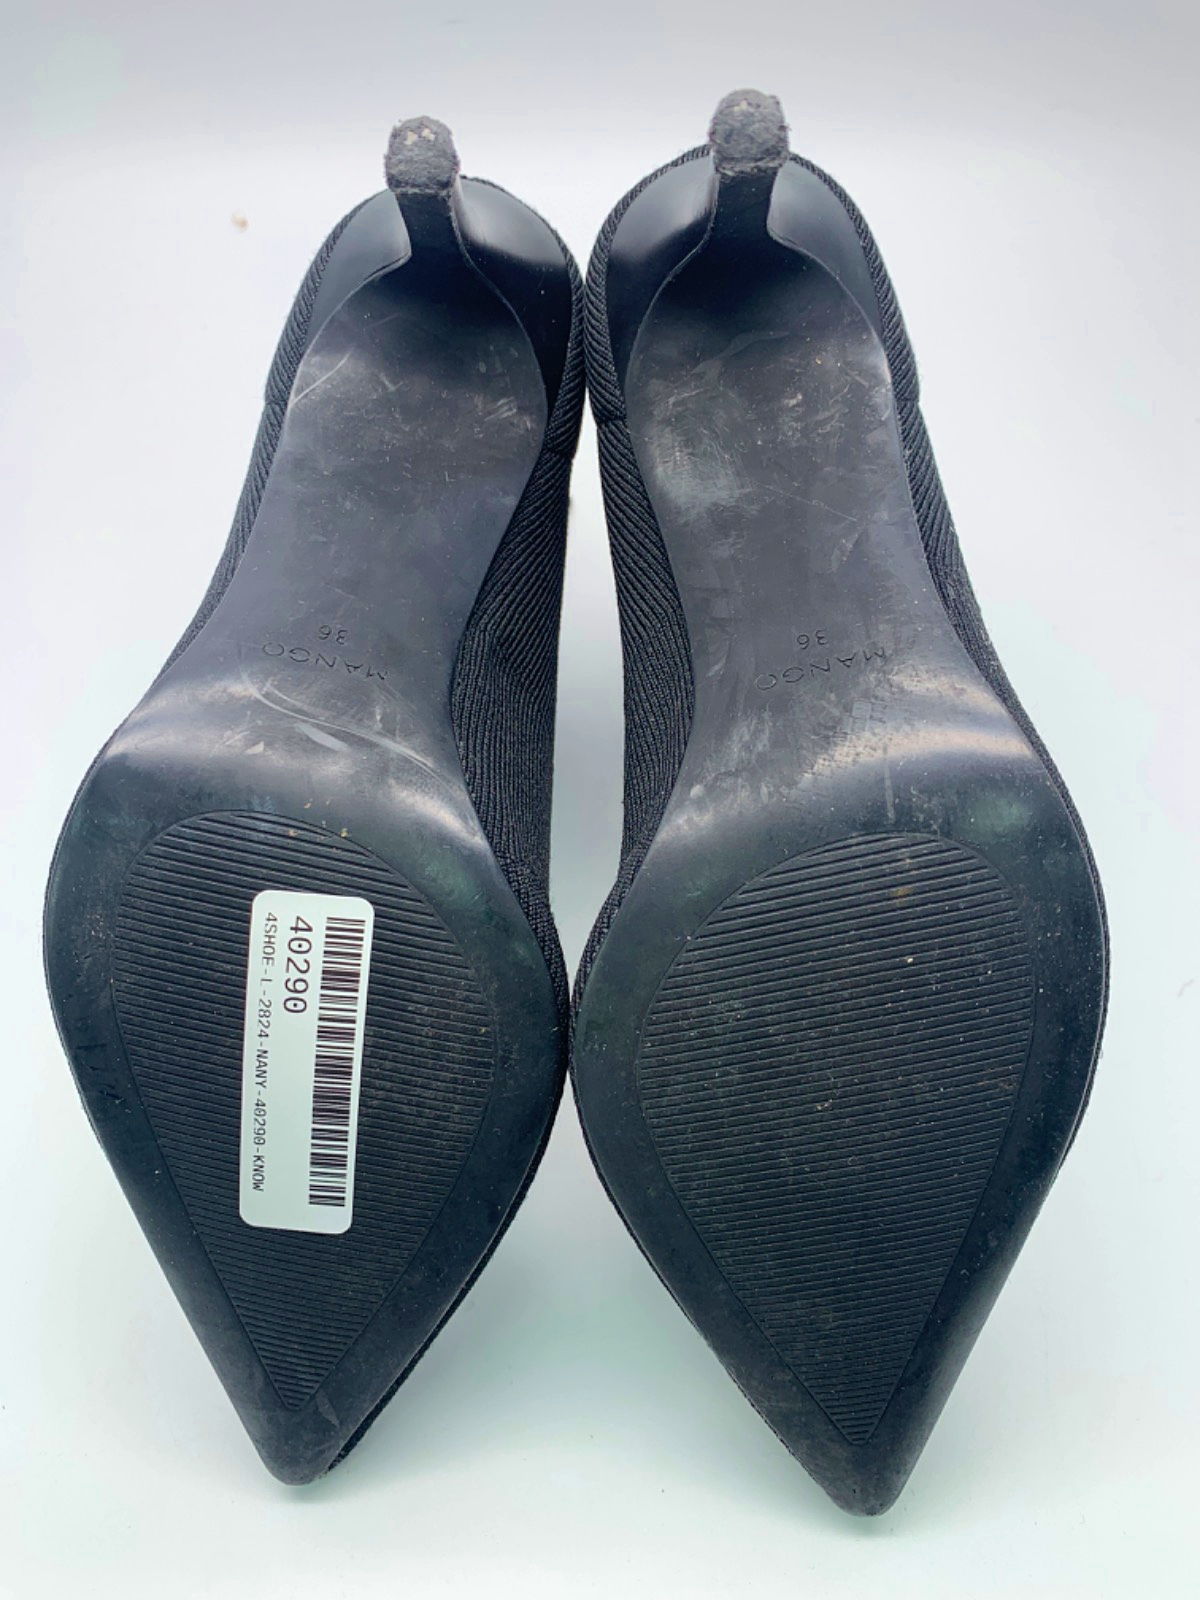 Mango Black Knit High Heel Ankle Boots UK 3.5